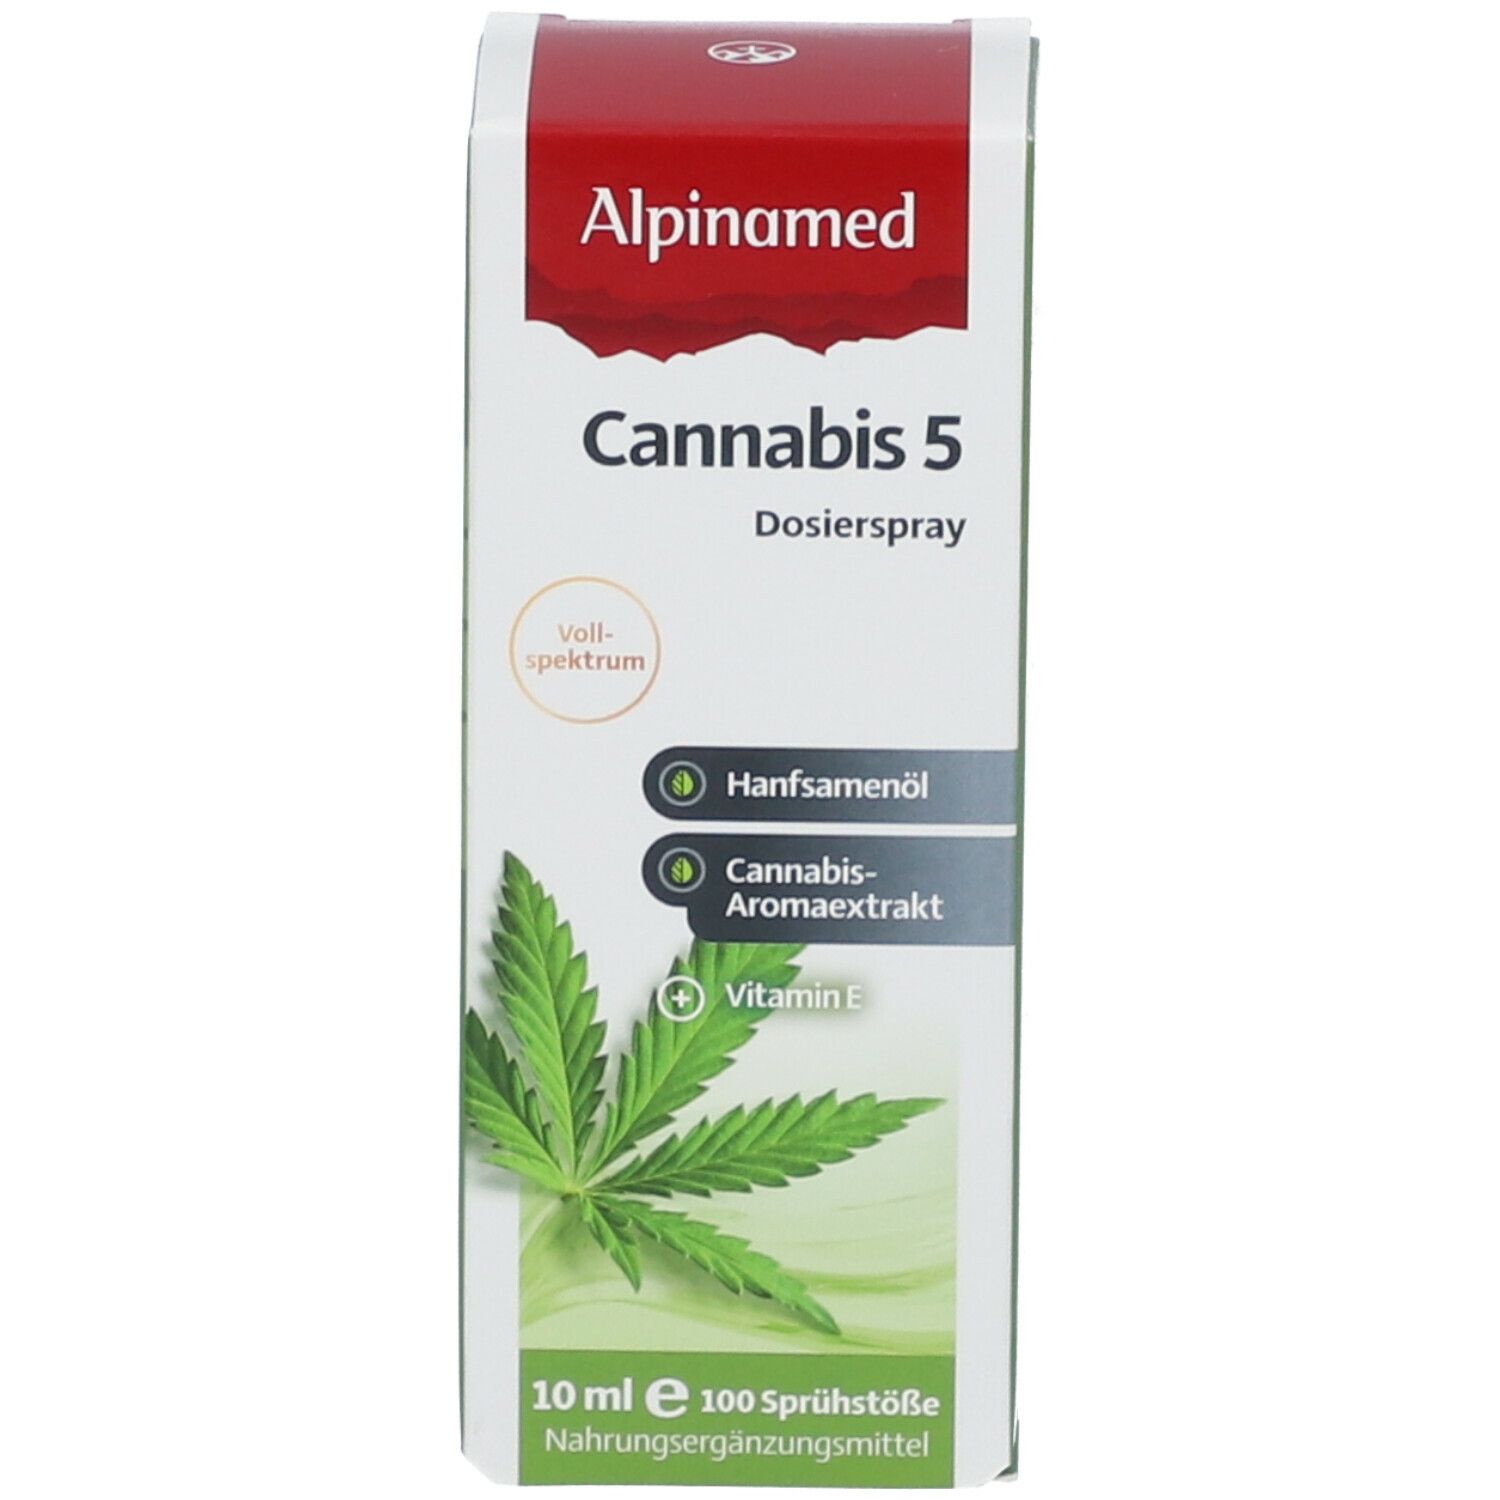 Alpinamed Cannabis 5